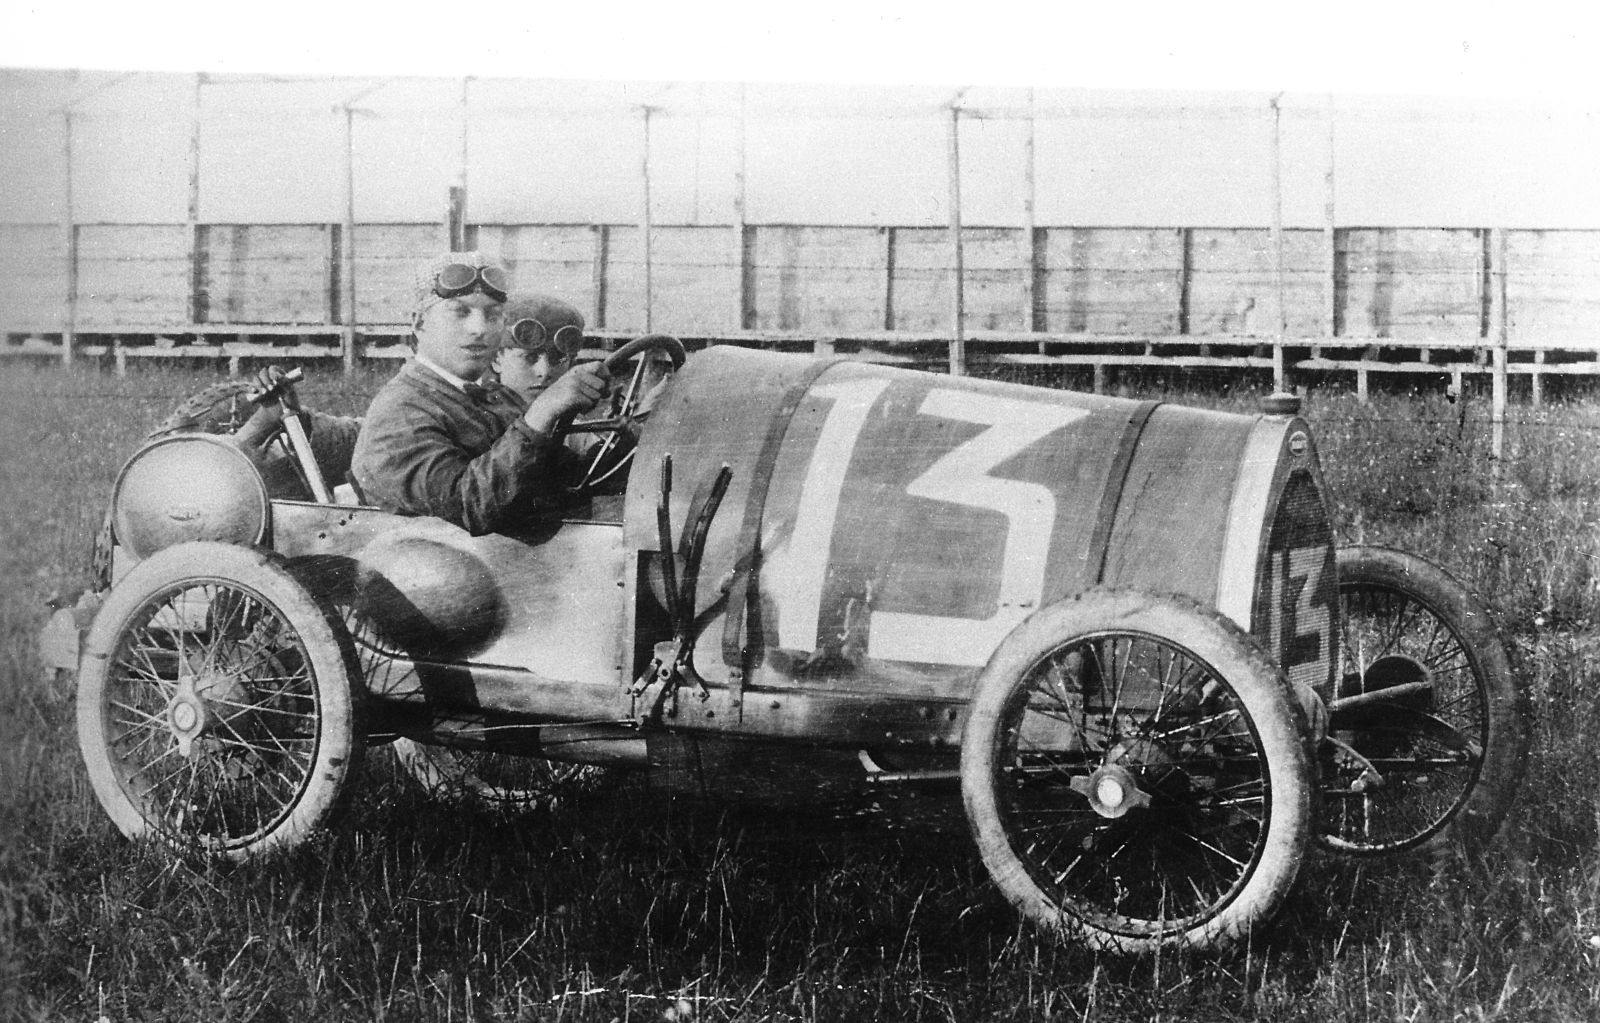 A legend turns 100: the Bugatti Type 13 Brescia"."